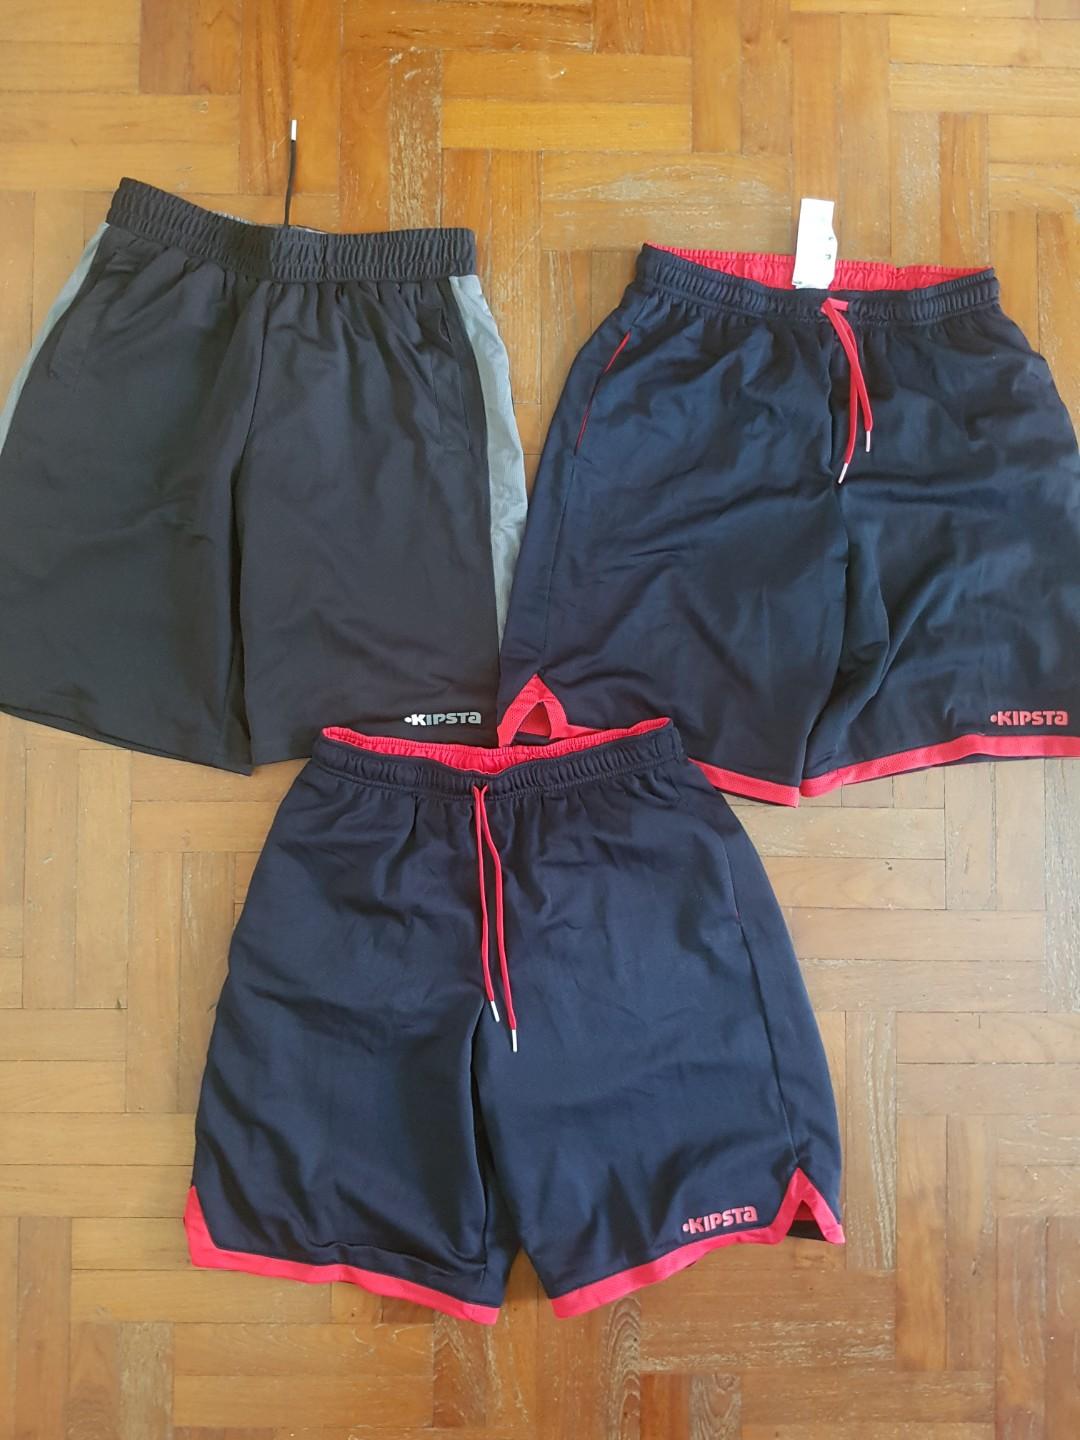 decathlon kipsta shorts